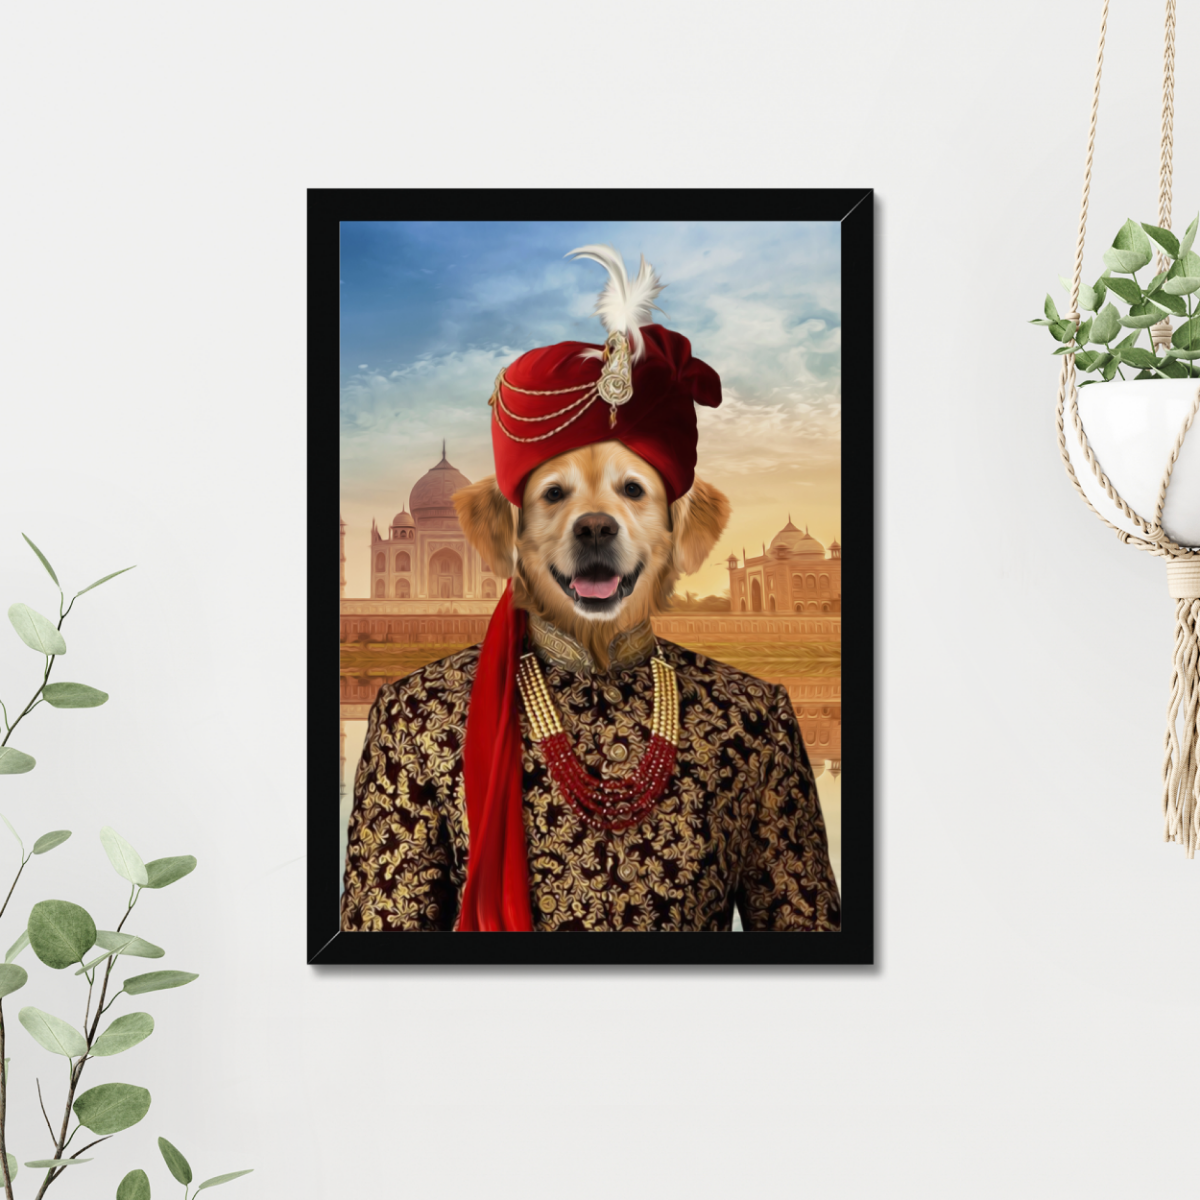 The Indian Raja: Custom Framed Pet Portrait - Paw & Glory, paw and glory, custom pet portraits near me, bespoke pet portraits, animal human portraits, painting of your dog, dog photo canvas, turn dog photo into art, pet portrait